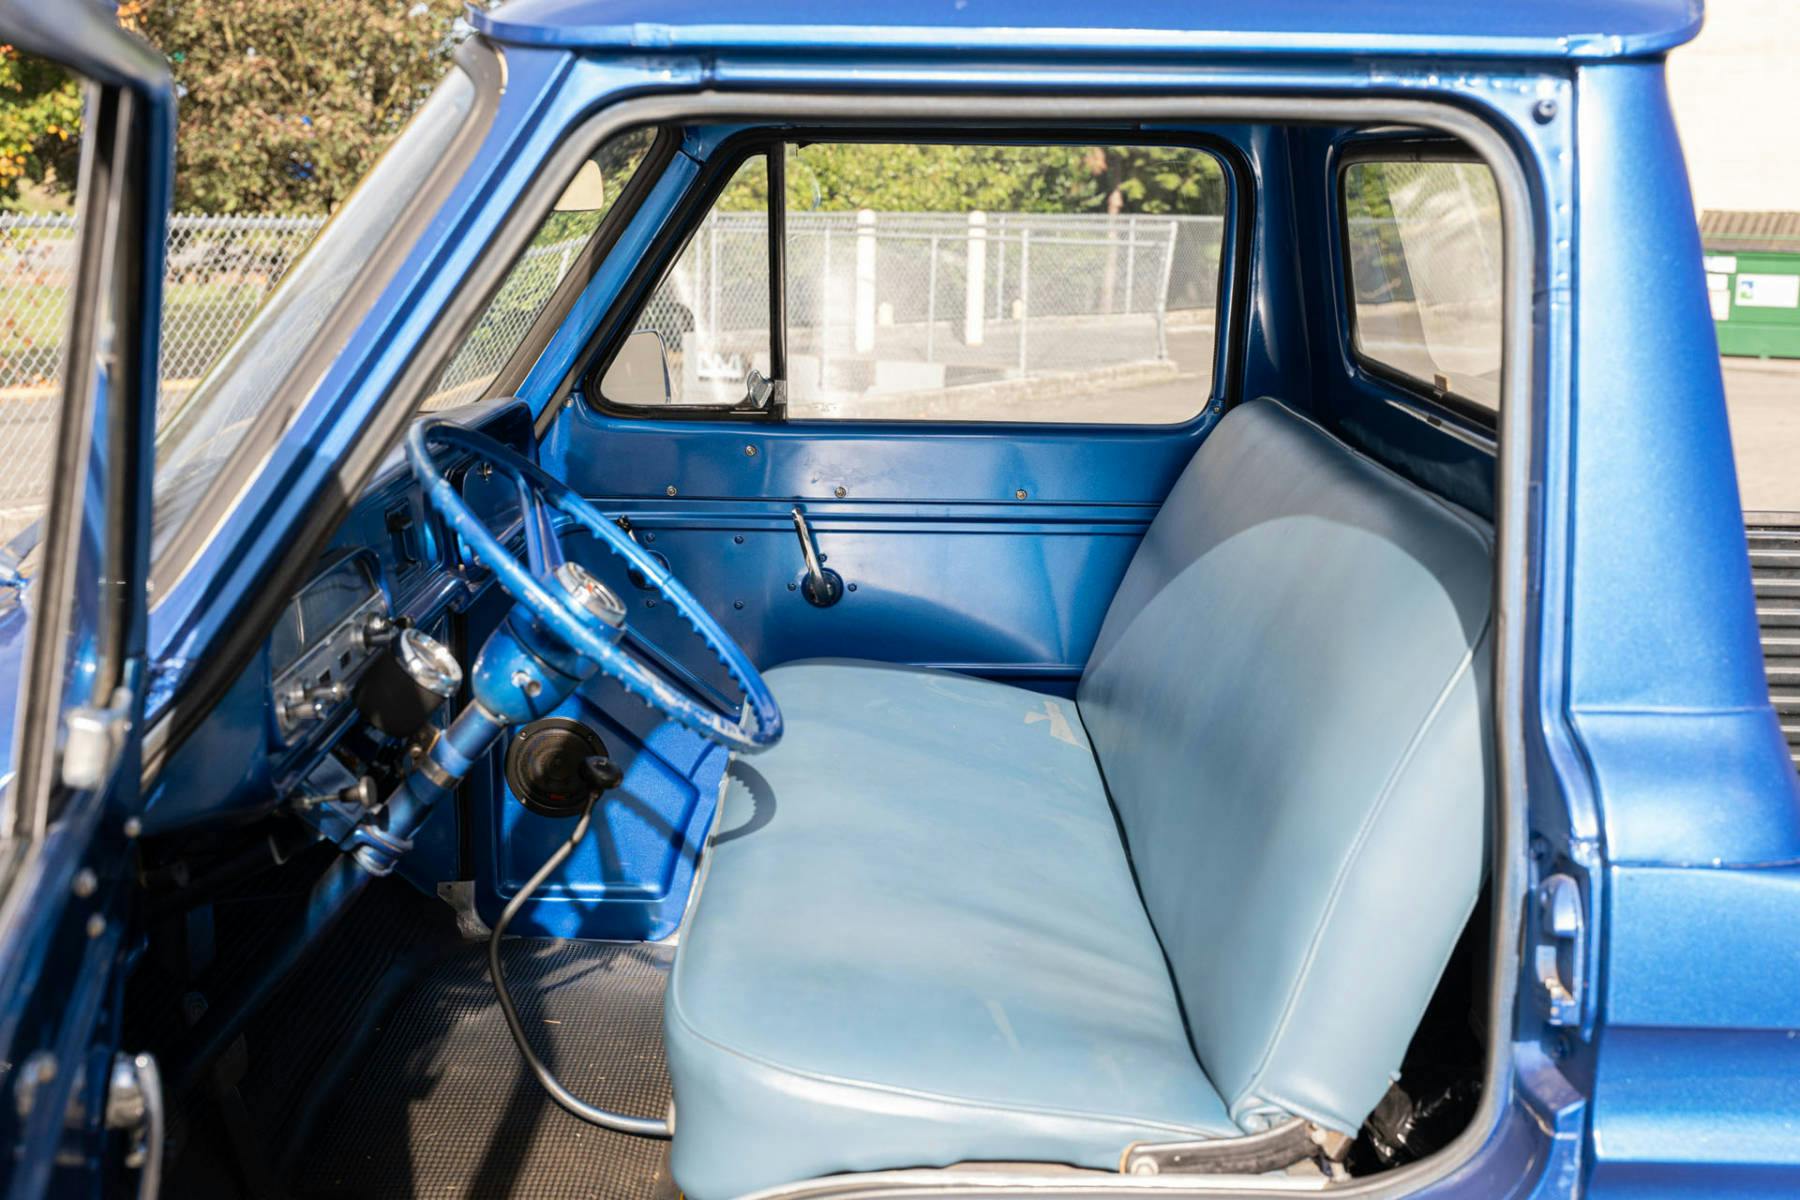 1961 Chevrolet Corvair 95 Rampside Pickup interior